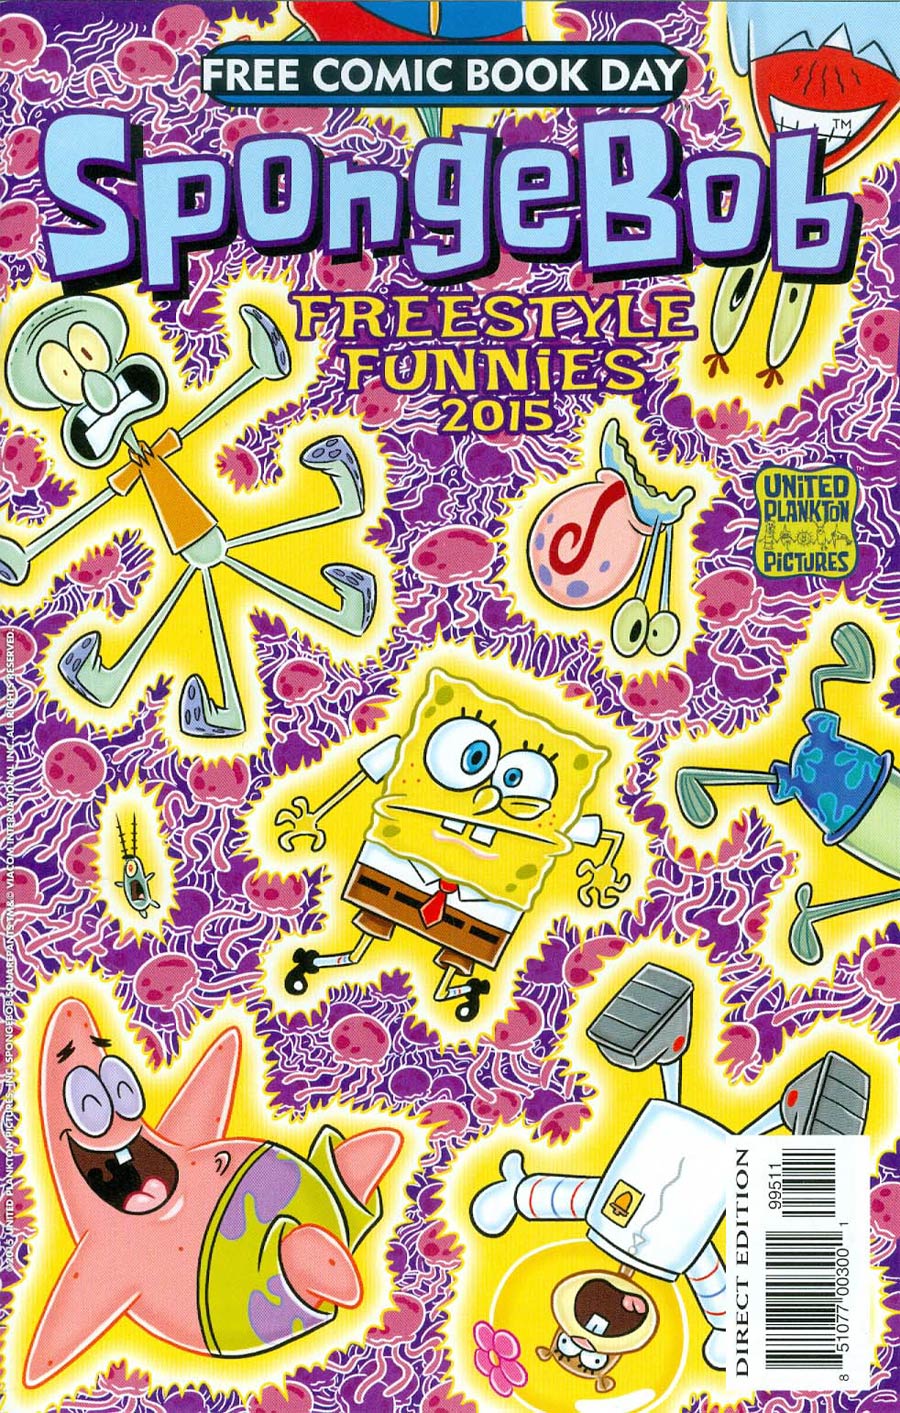 FCBD 2015 SpongeBob Freestyle Funnies